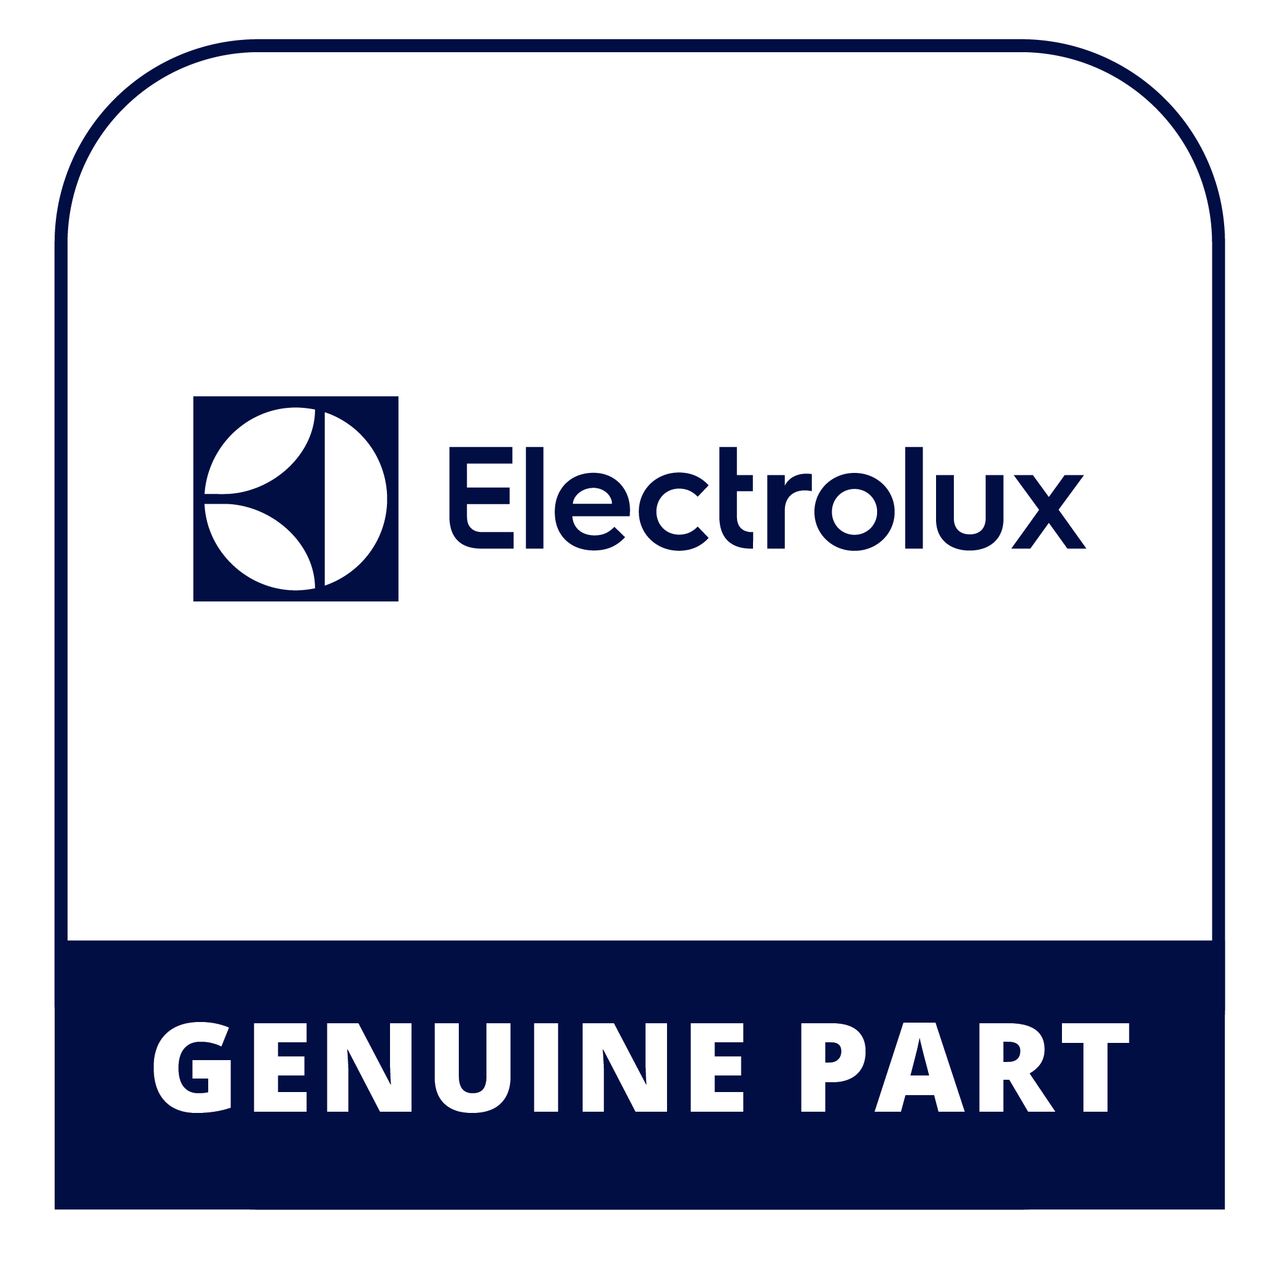 Frigidaire - Electrolux 316419381 Overlay - Genuine Electrolux Part